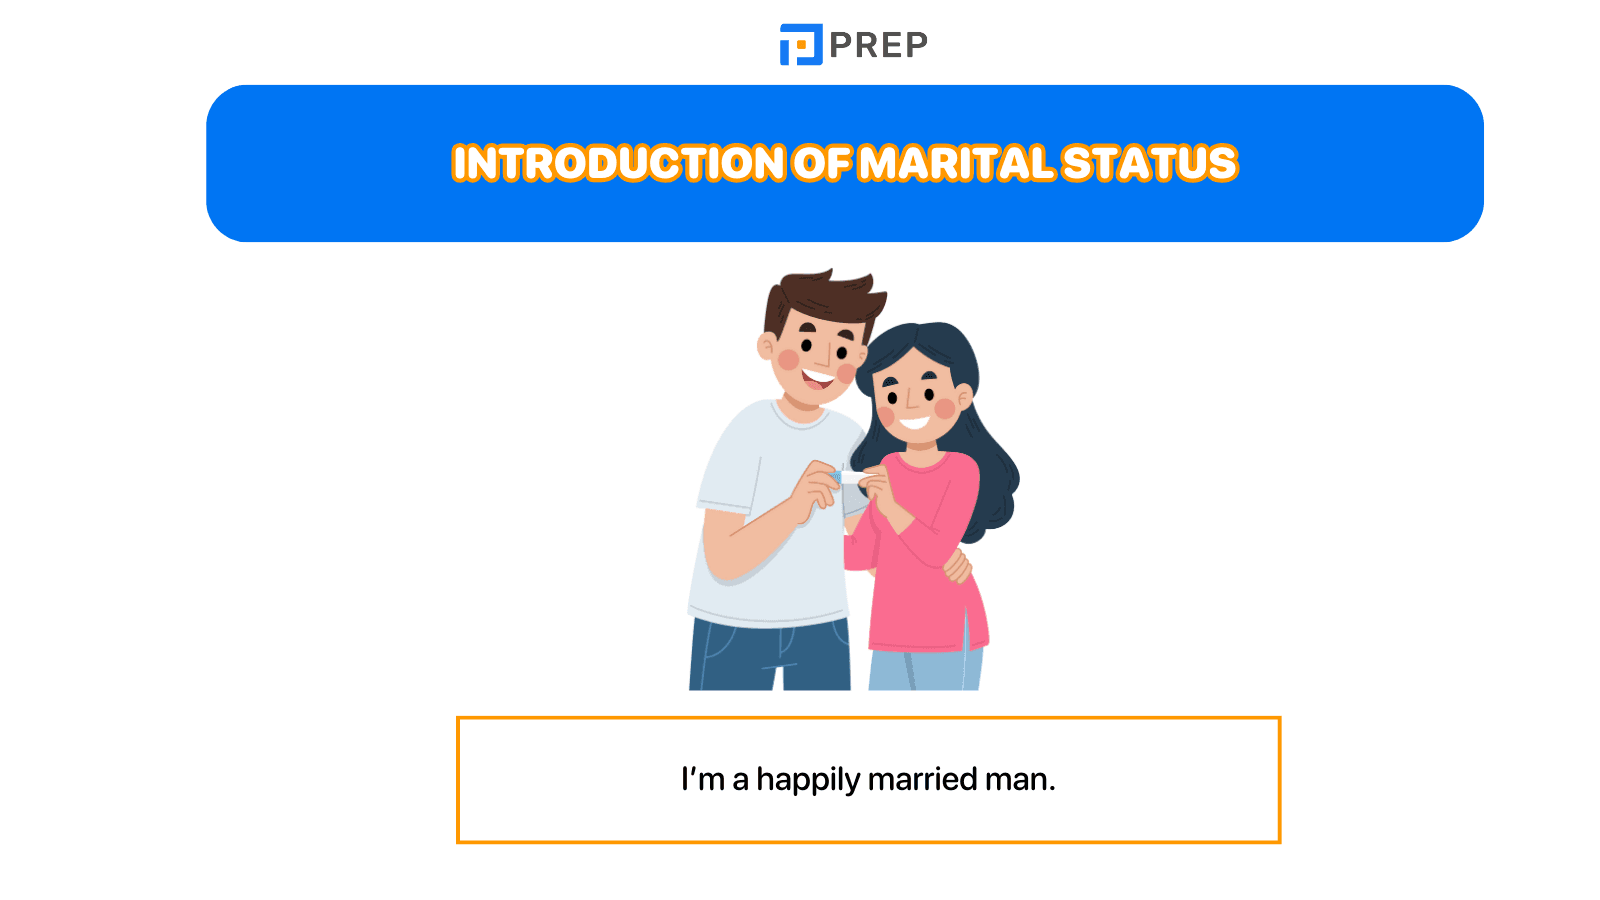 Introduction of marital status